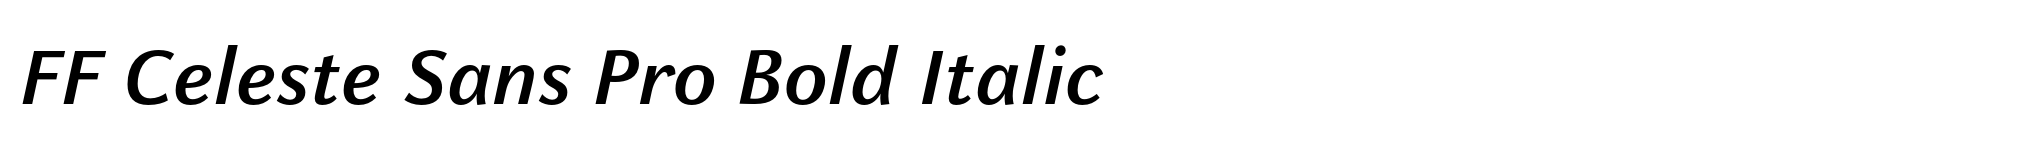 FF Celeste Sans Pro Bold Italic image